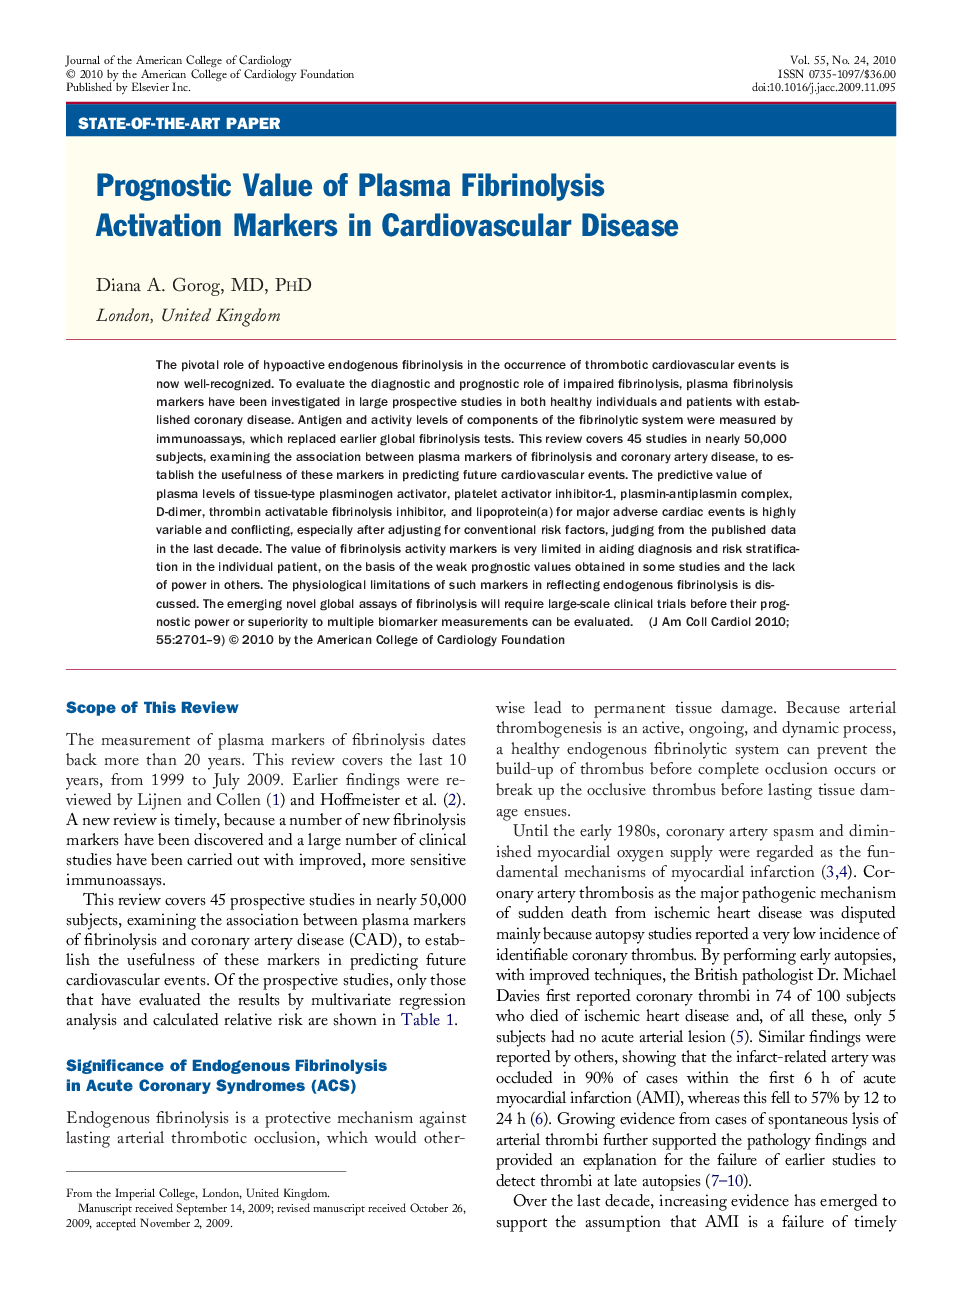 Prognostic Value of Plasma Fibrinolysis Activation Markers in Cardiovascular Disease